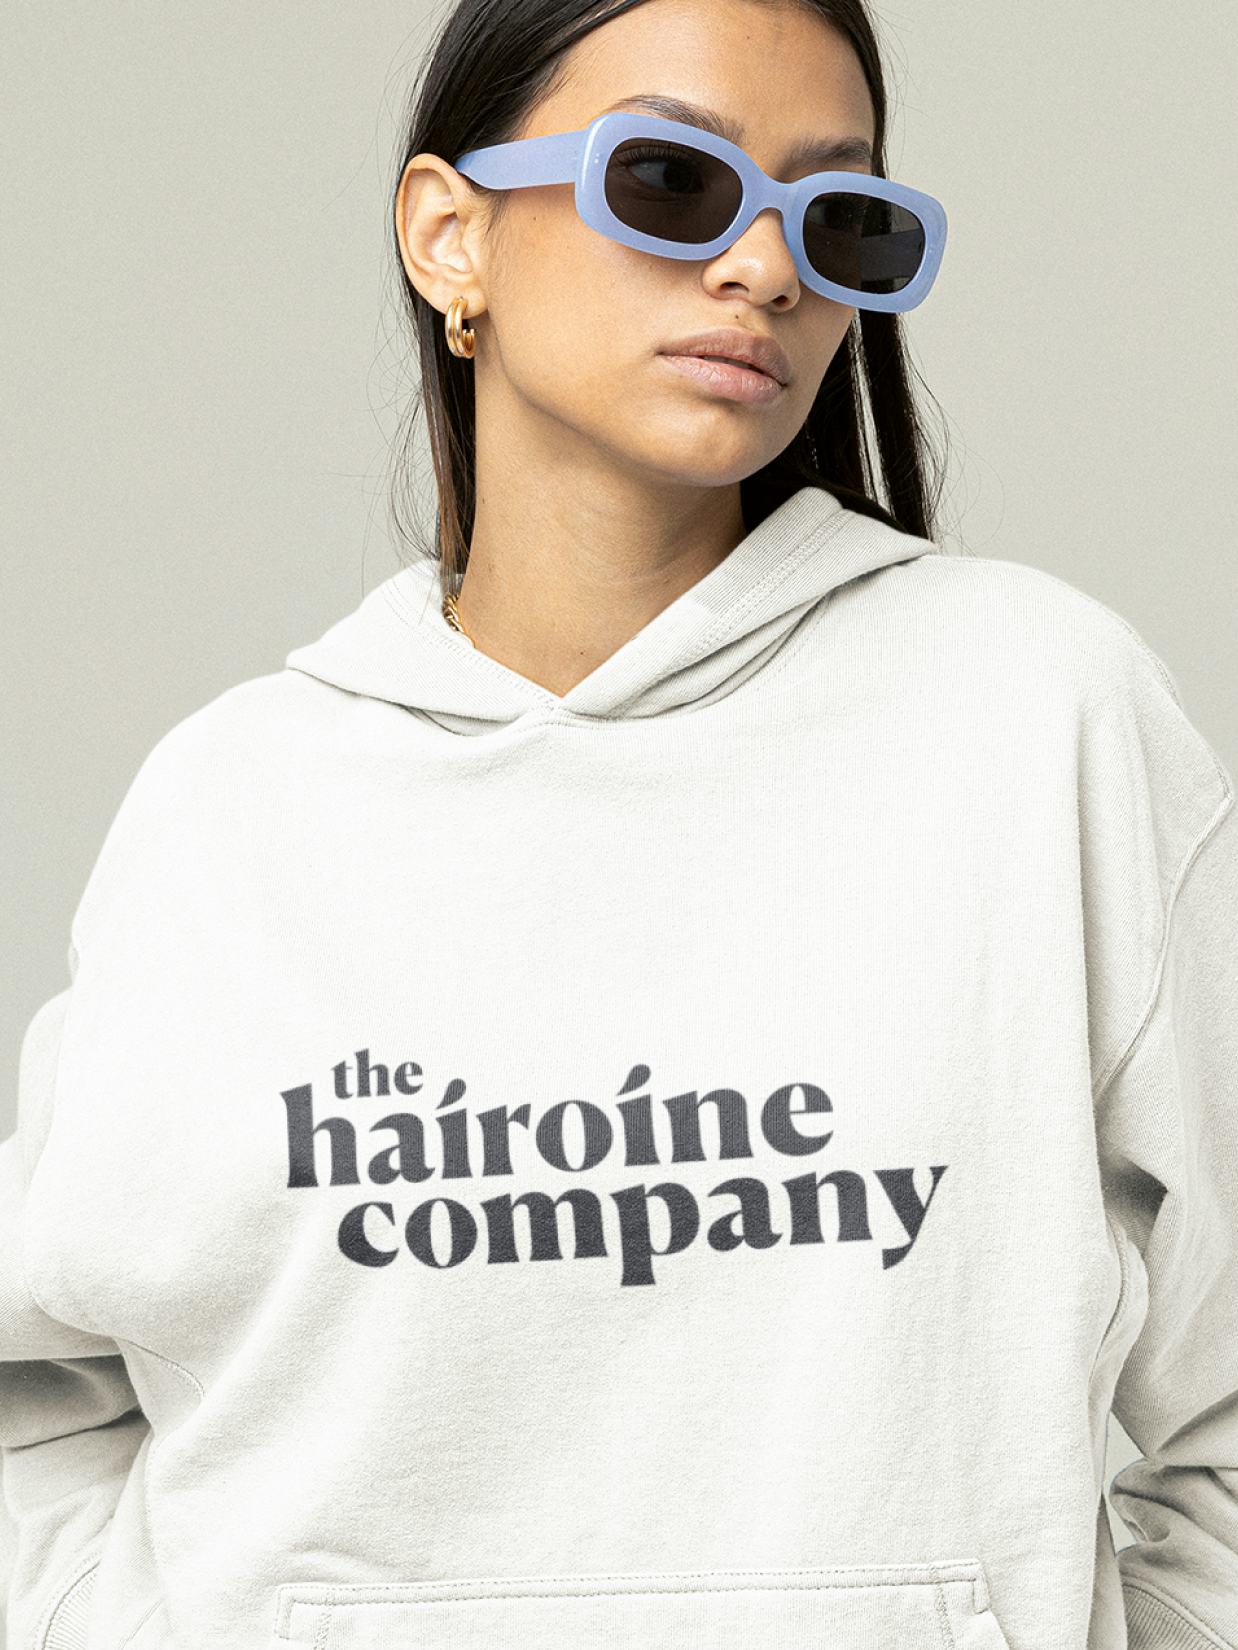 The Hairoine Company - A hair care brand for confident women